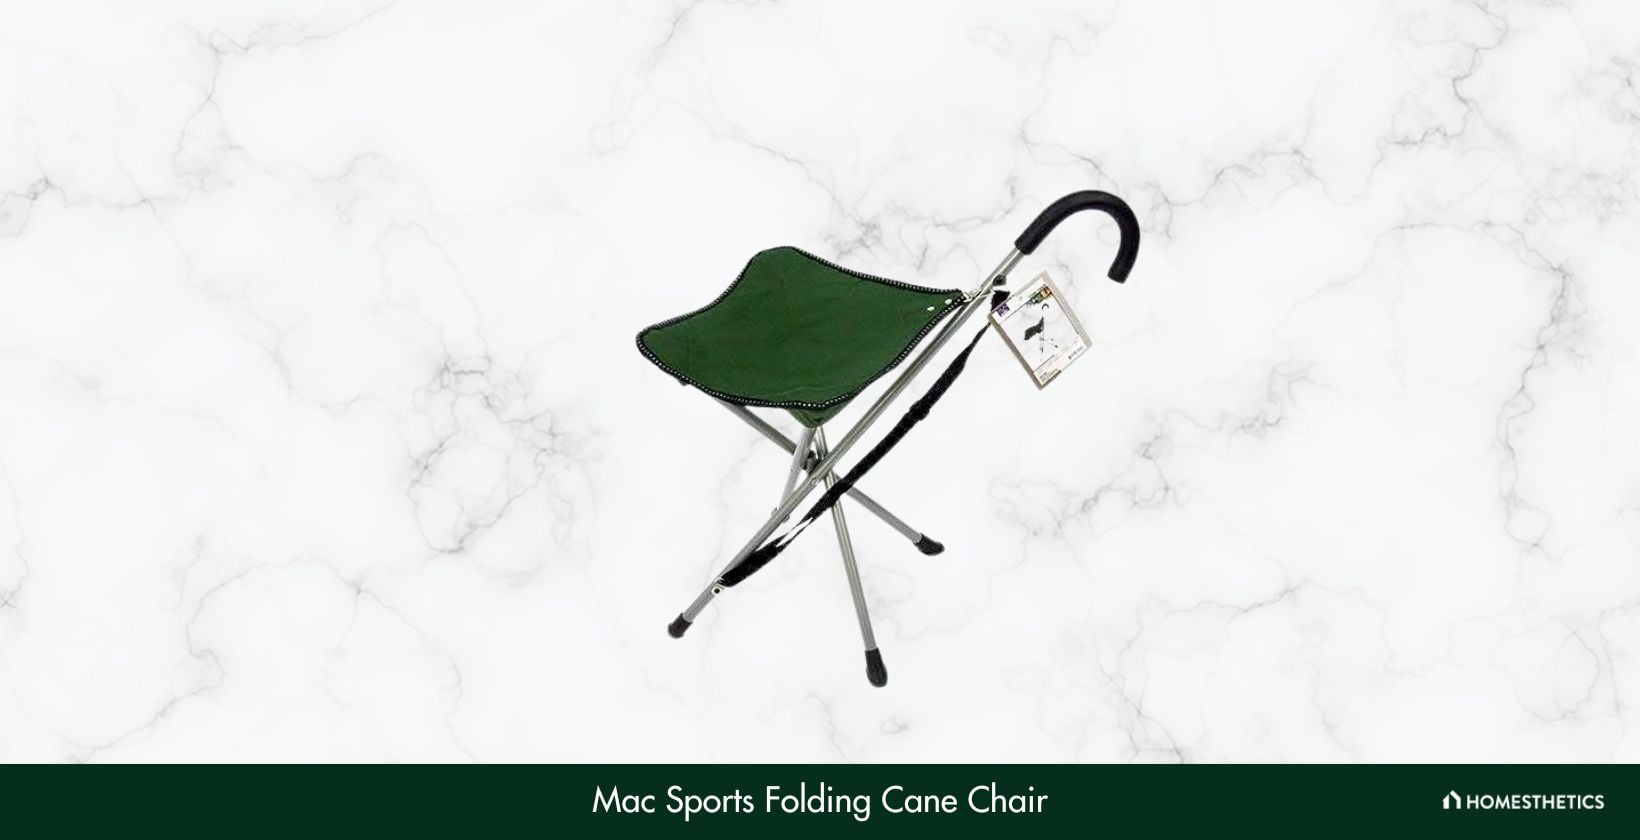 Folding Cane Chair by Mac Sports